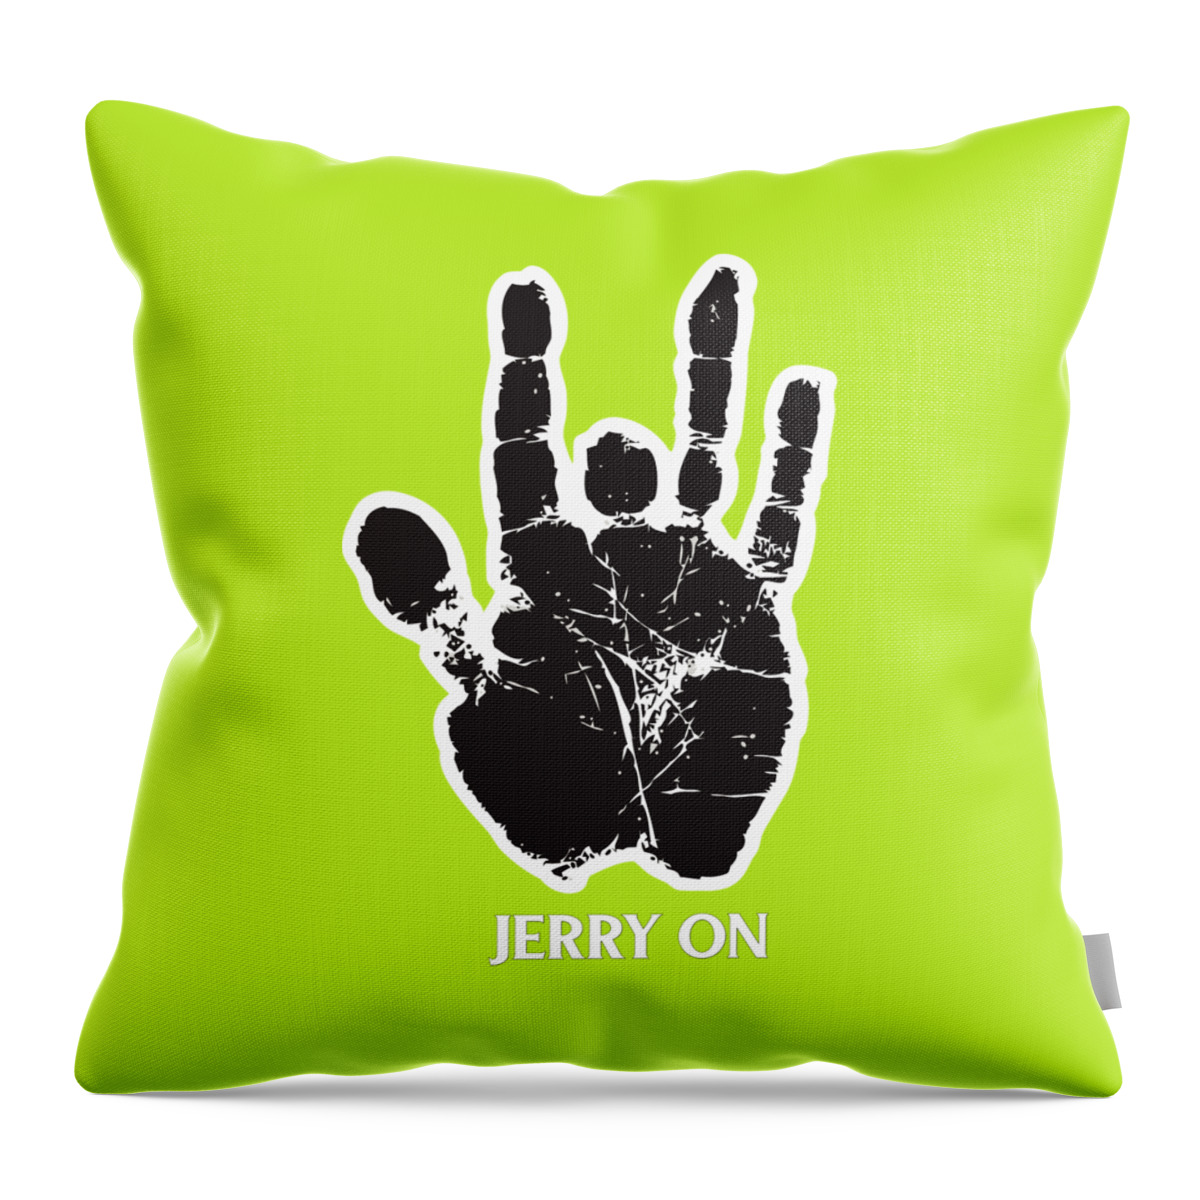 Grateful Dead Throw Pillow featuring the digital art Jerry On by Senior gd